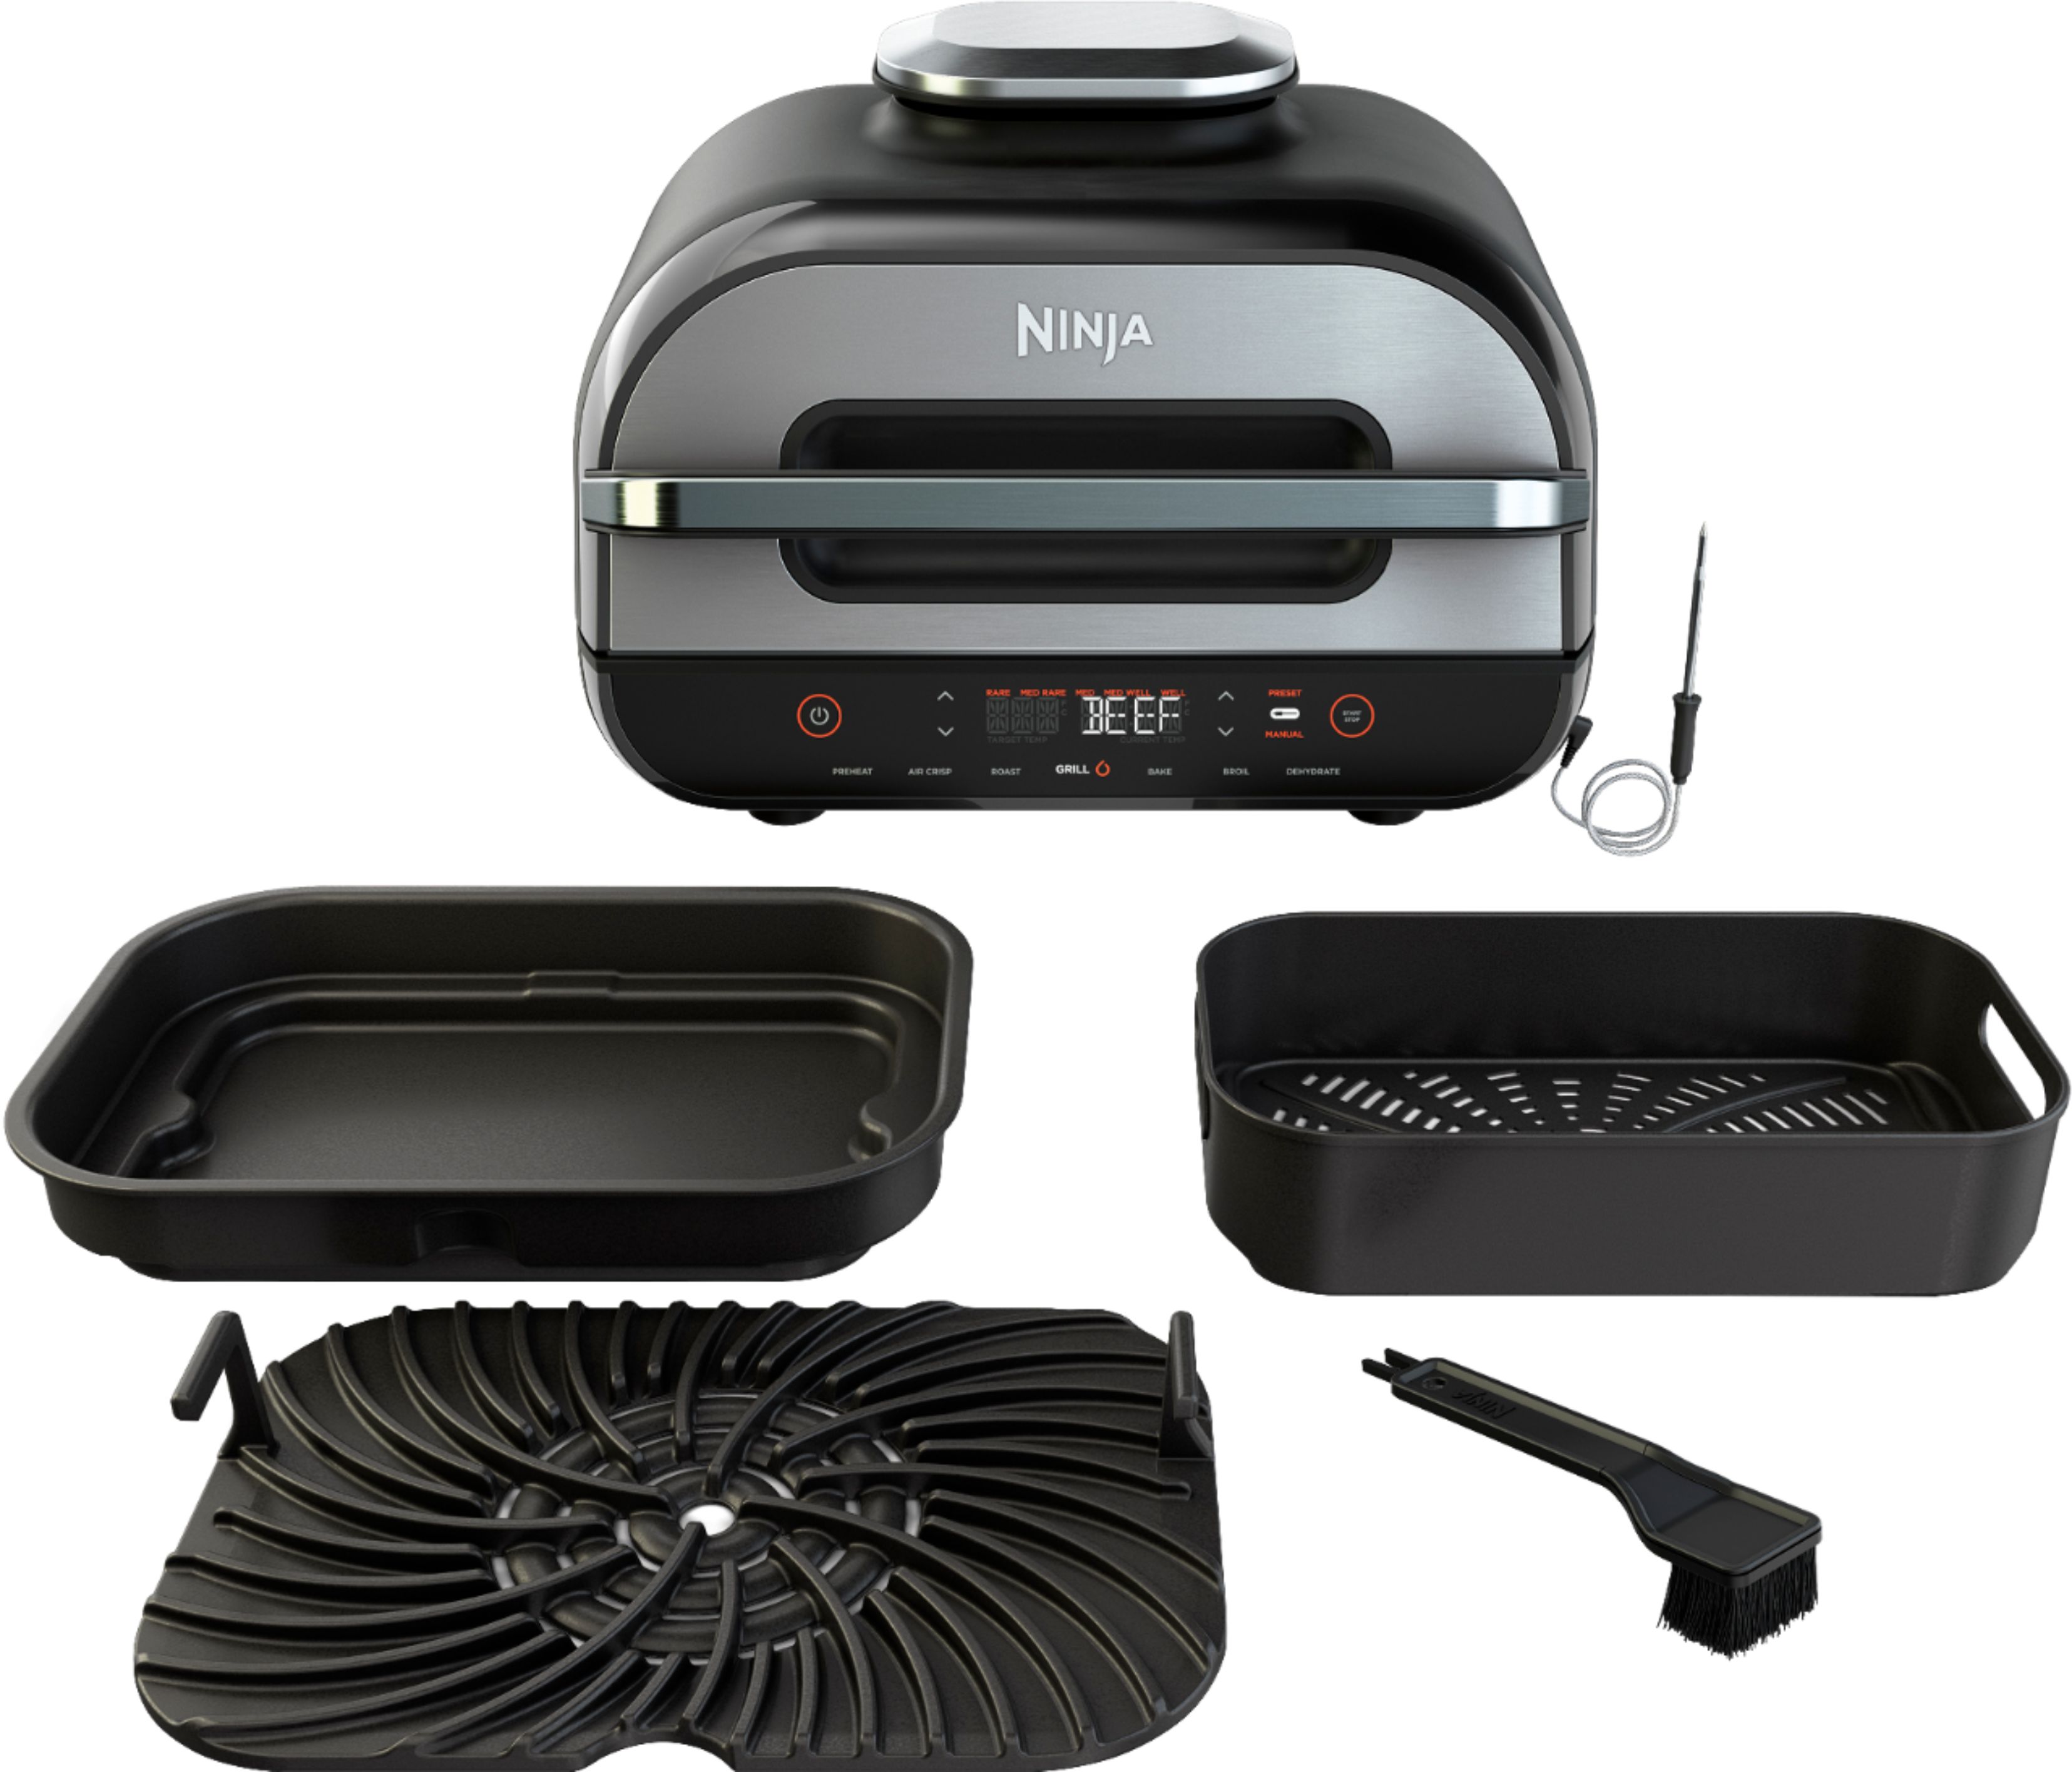 Ninja Foodi 6-in-1 Smart XL Indoor Grill Air Fryer FG551 Roast Bake Dehydrate